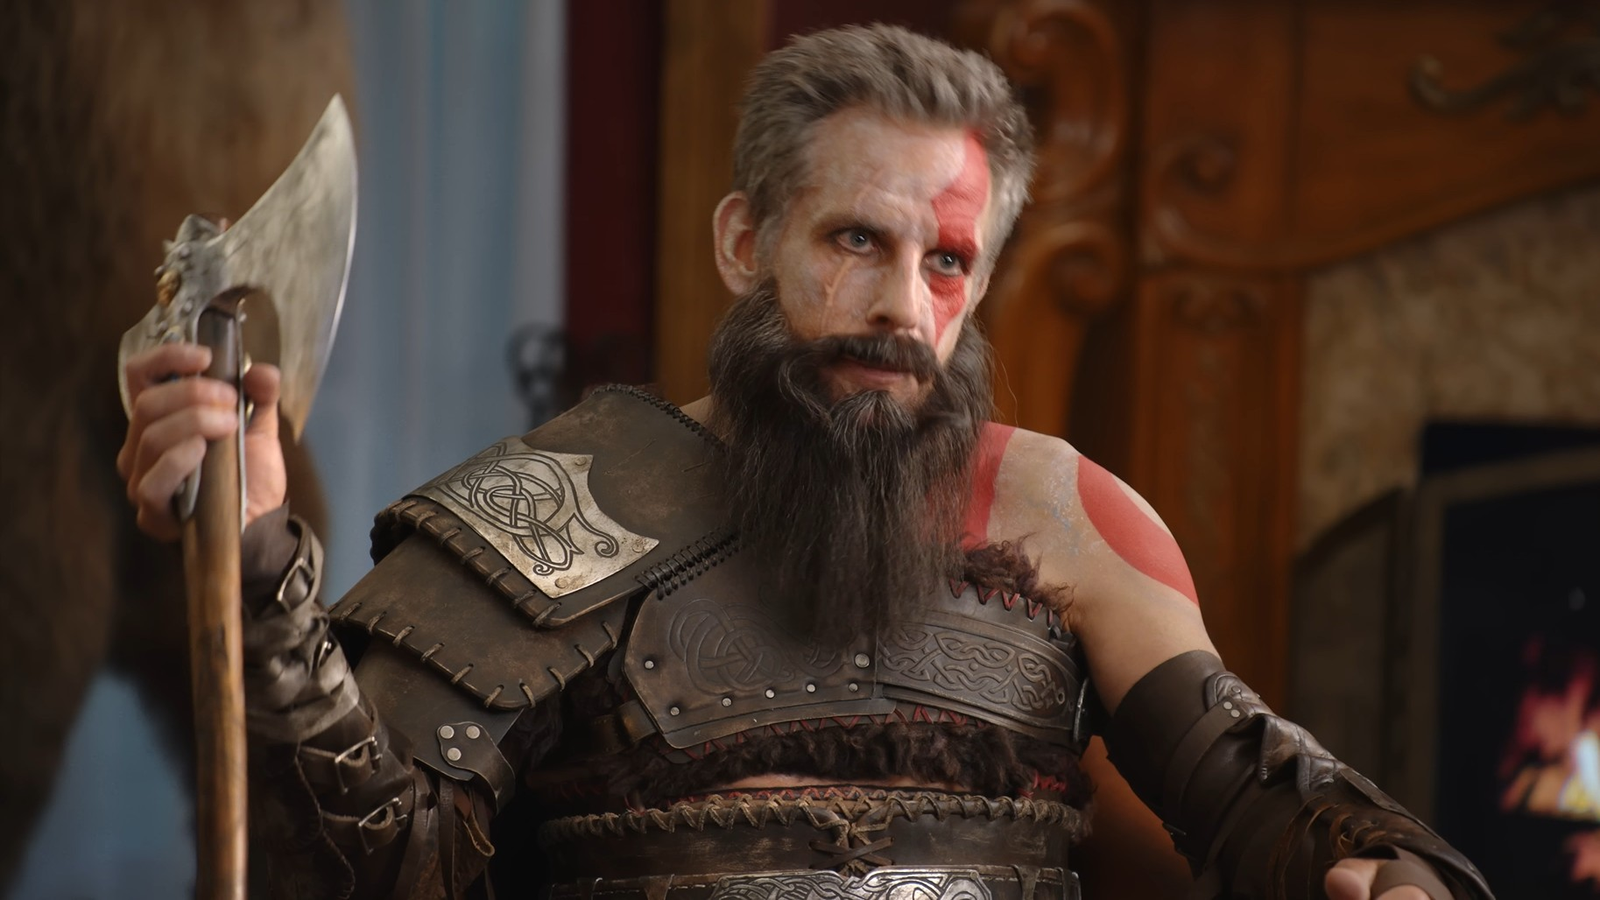 God of War Ragnarök - Launch Trailer